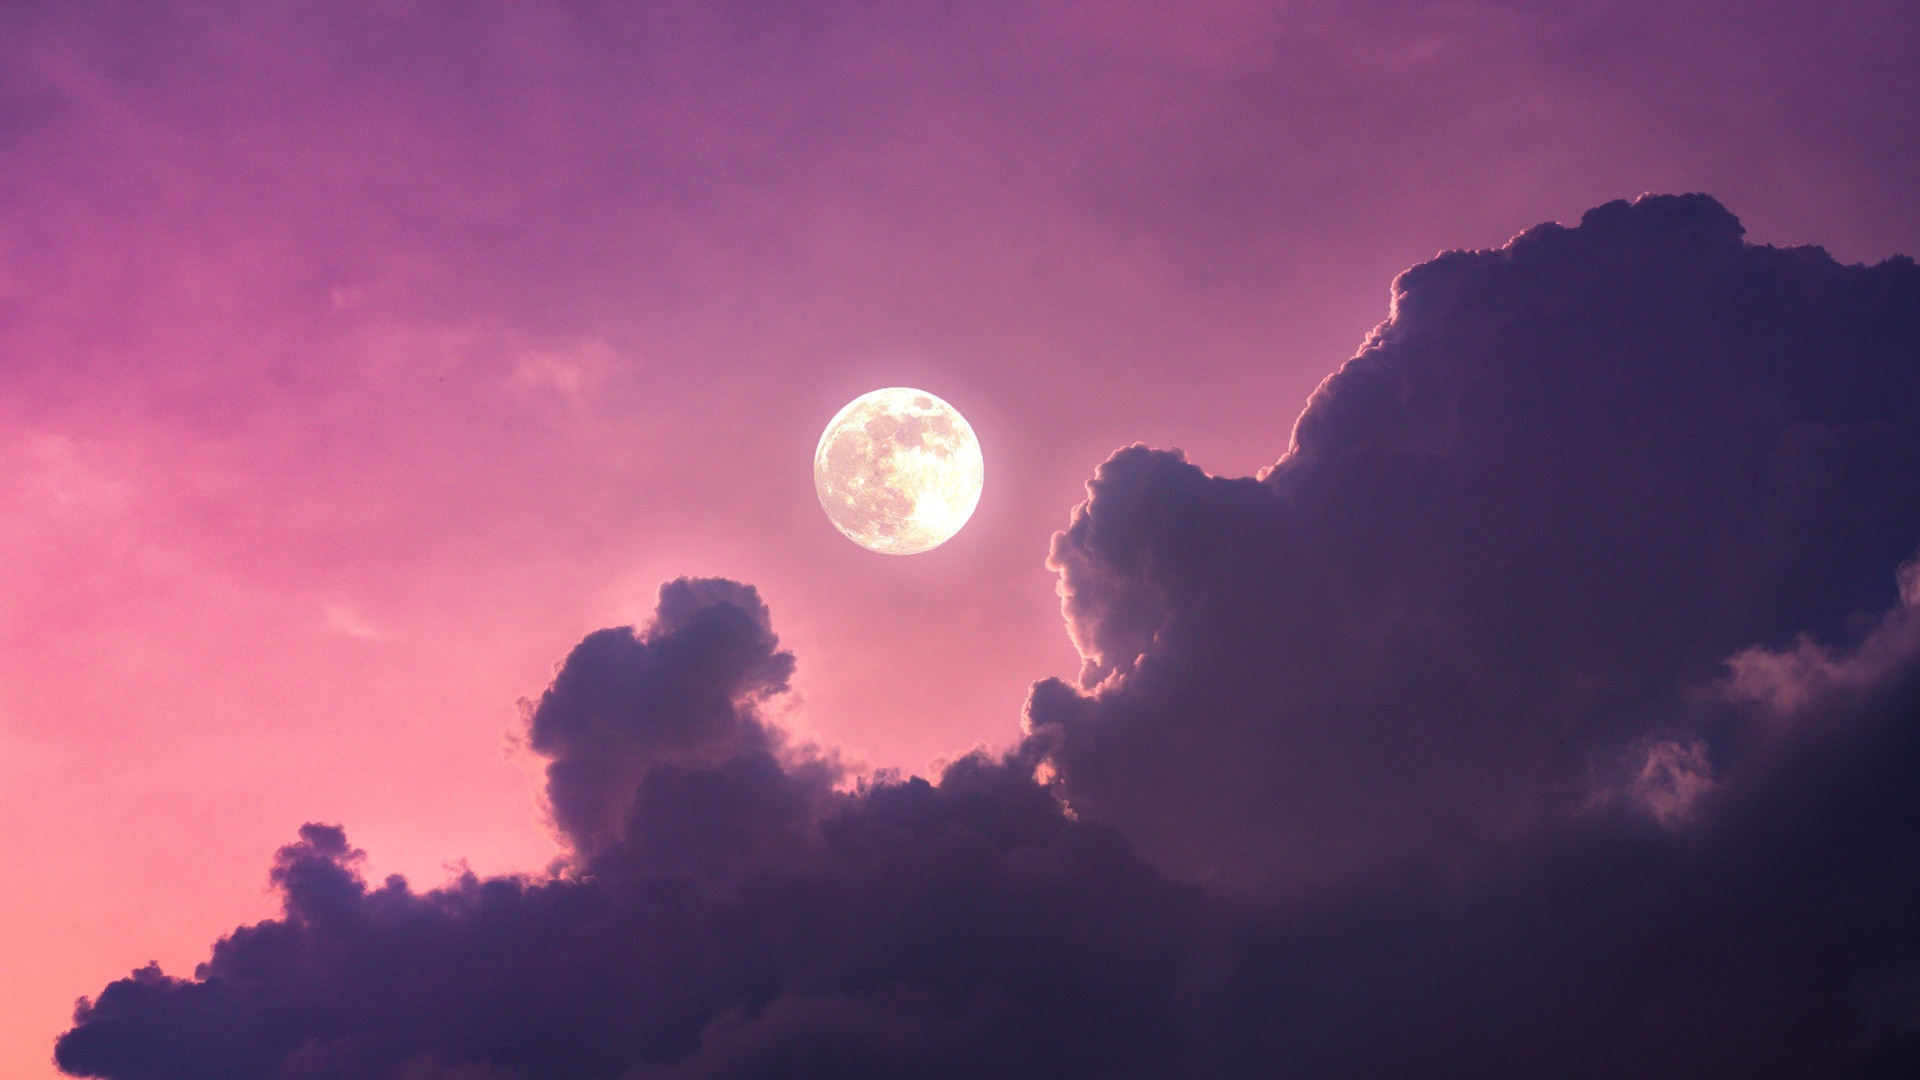 Full moon Wallpaper 4K, Clouds, Pink sky, Nature, #1653